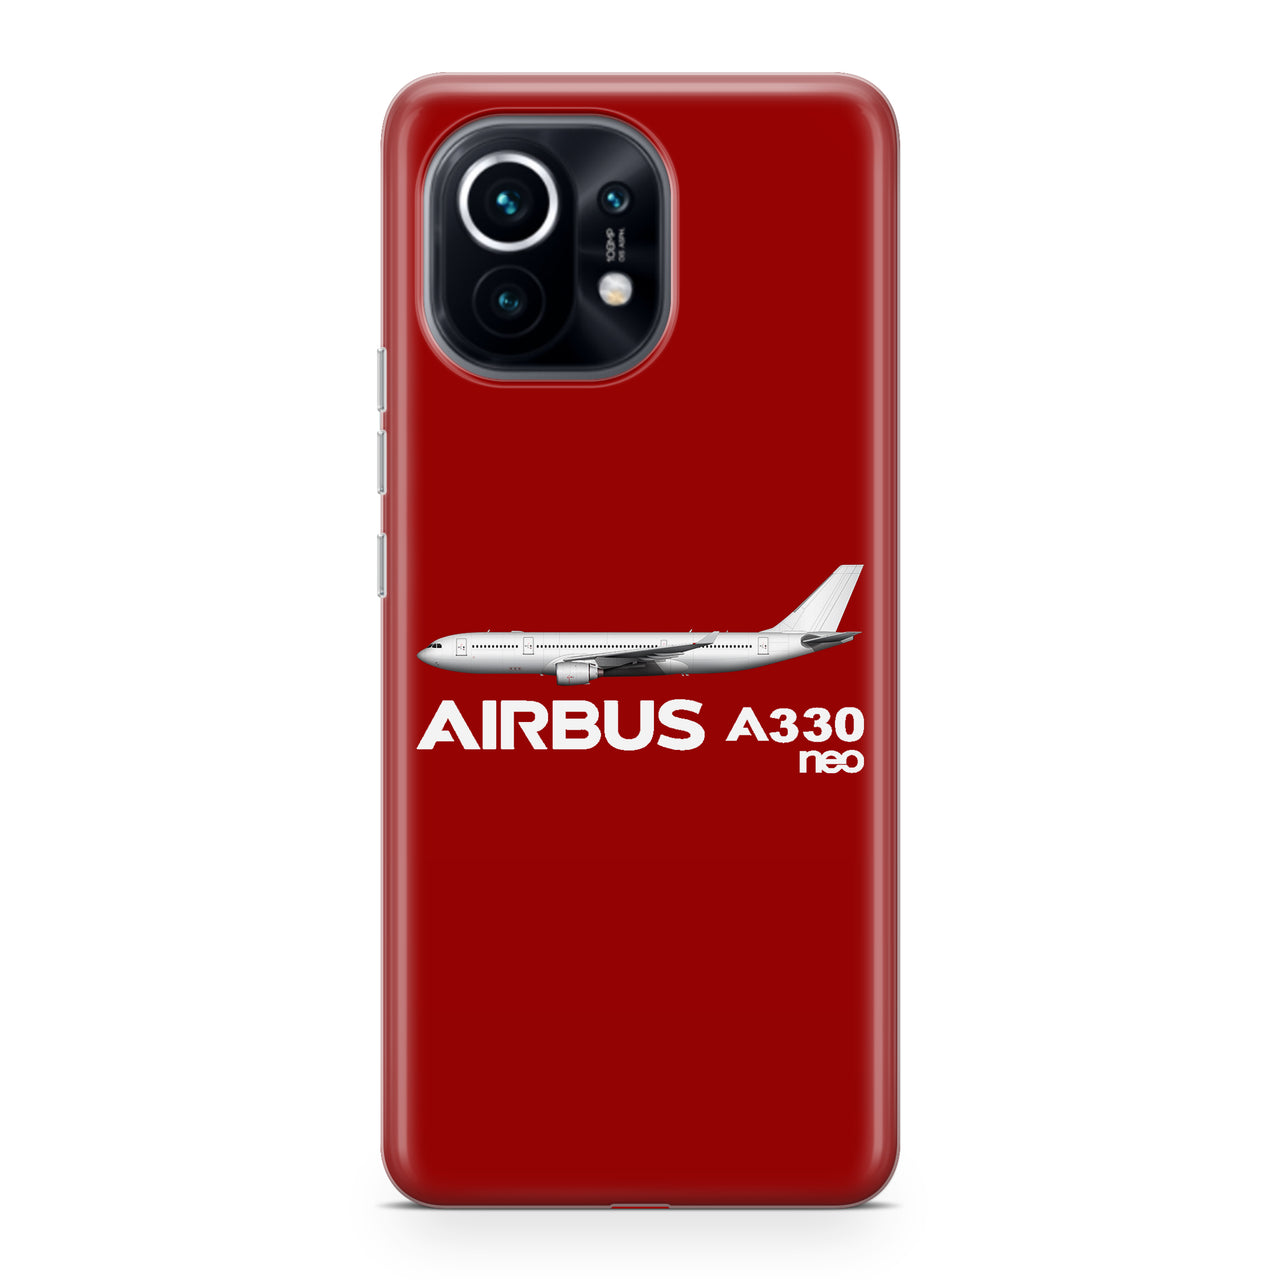 The Airbus A330neo Designed Xiaomi Cases